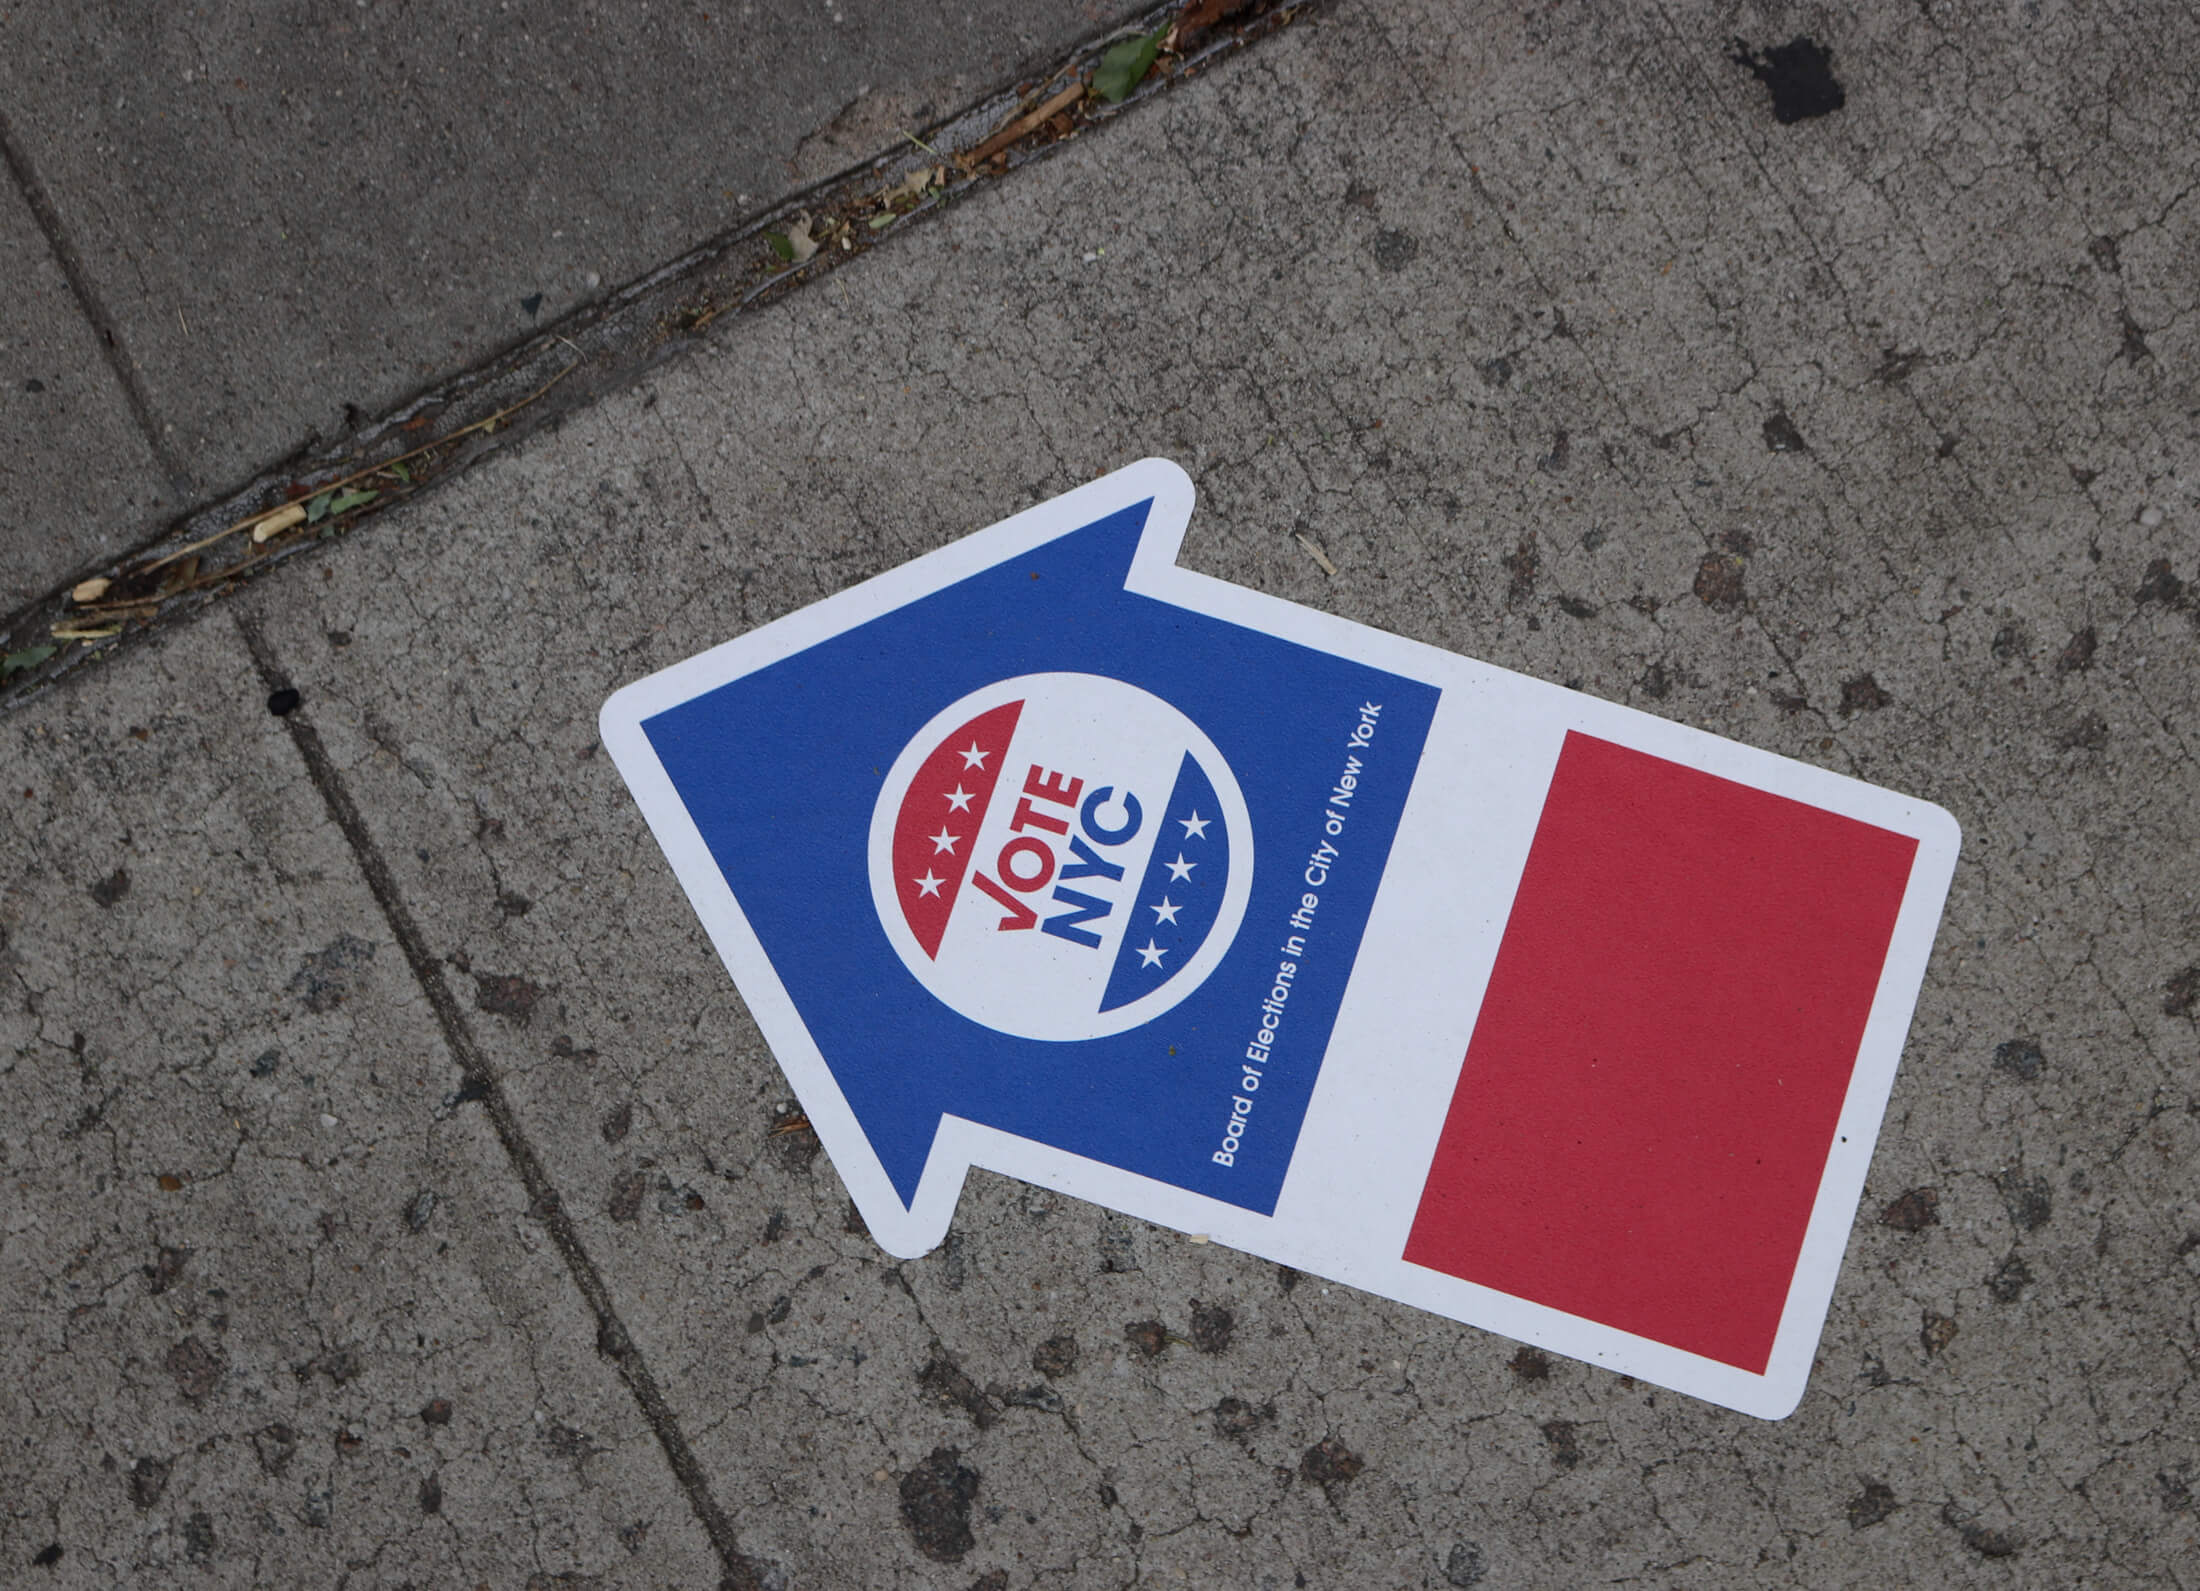 election sticker on sidewalk